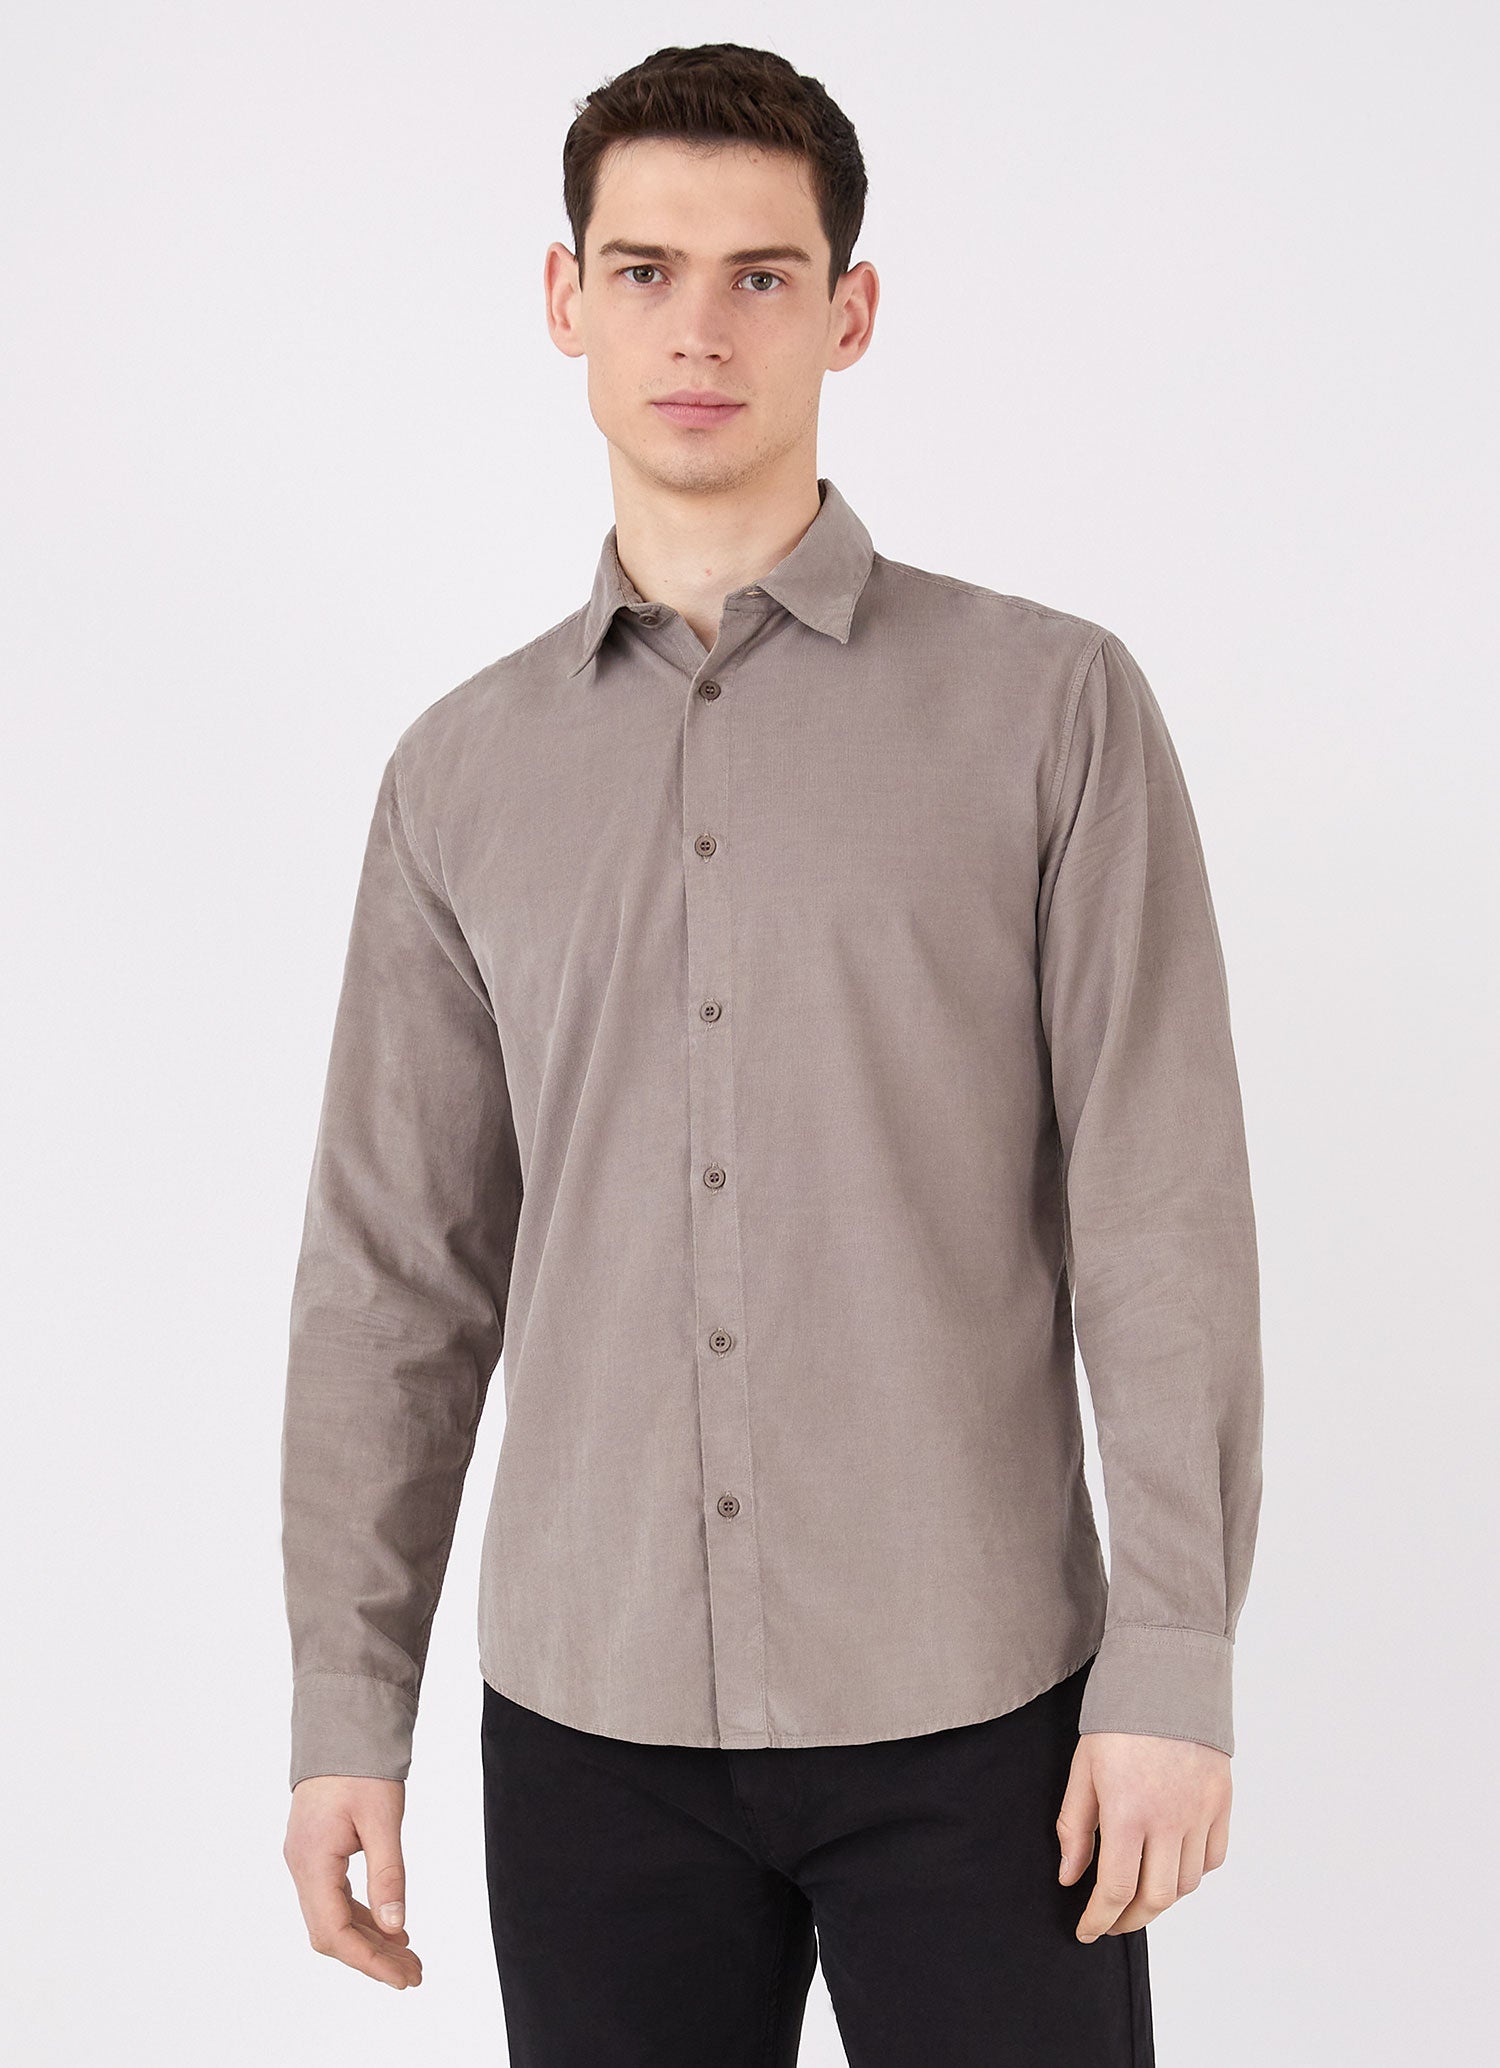 Men's Fine Cord Shirt in Umber Brown